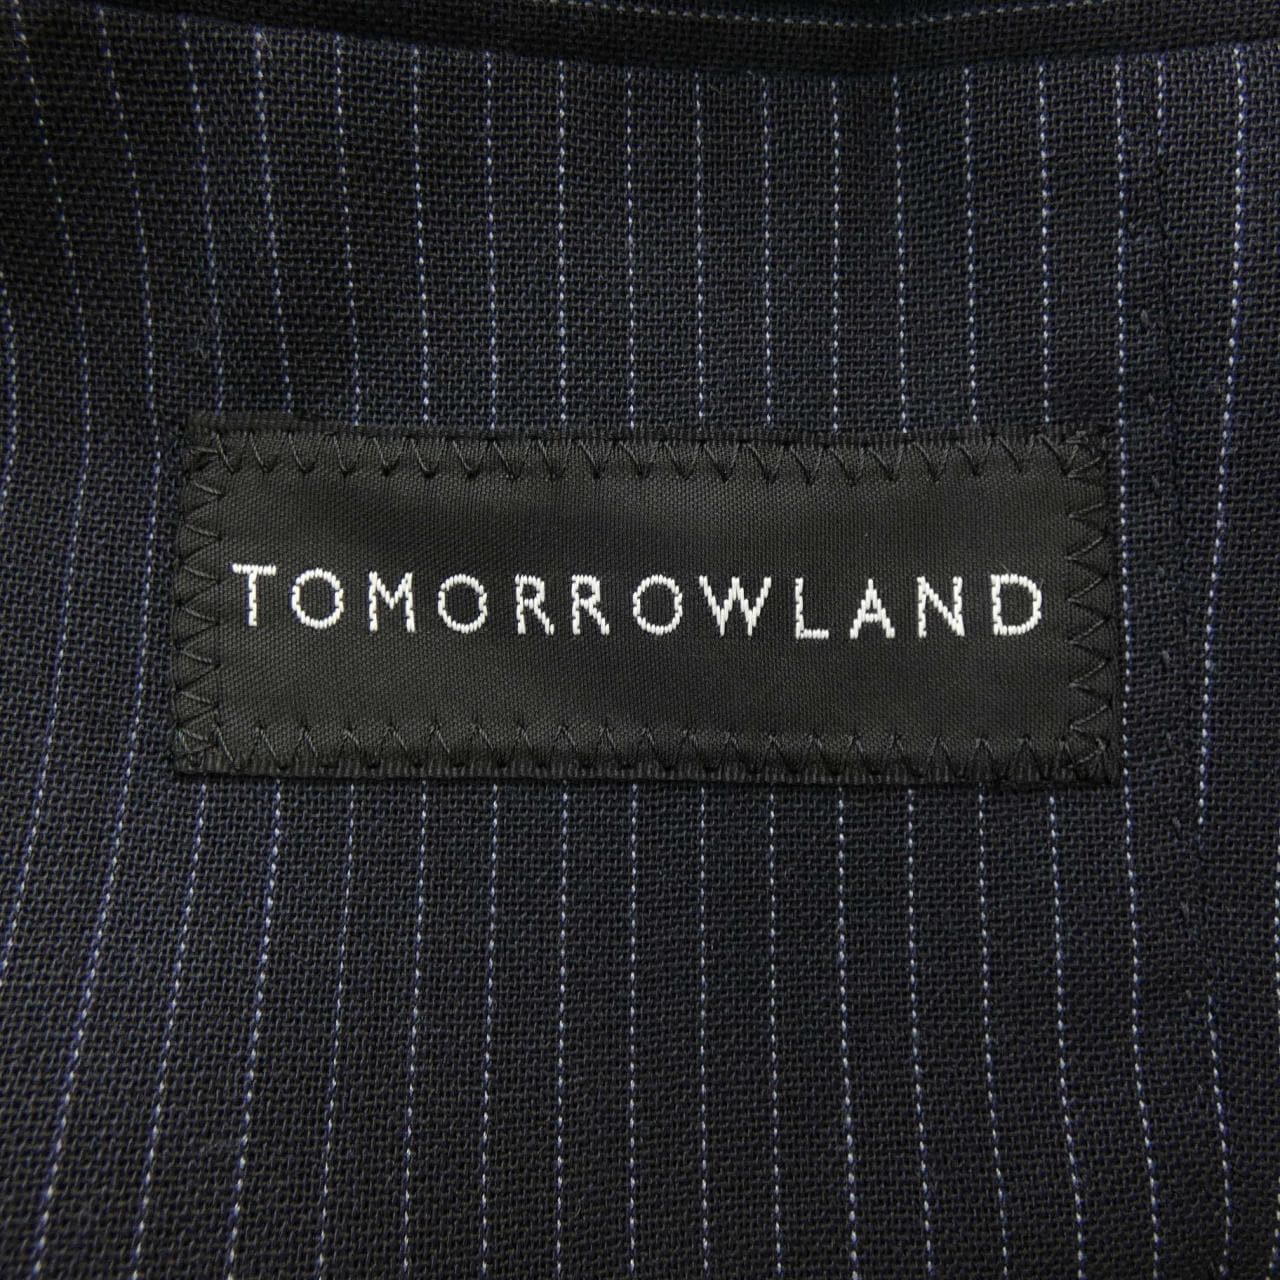 Tomorrowland TOMORROW LAND suit